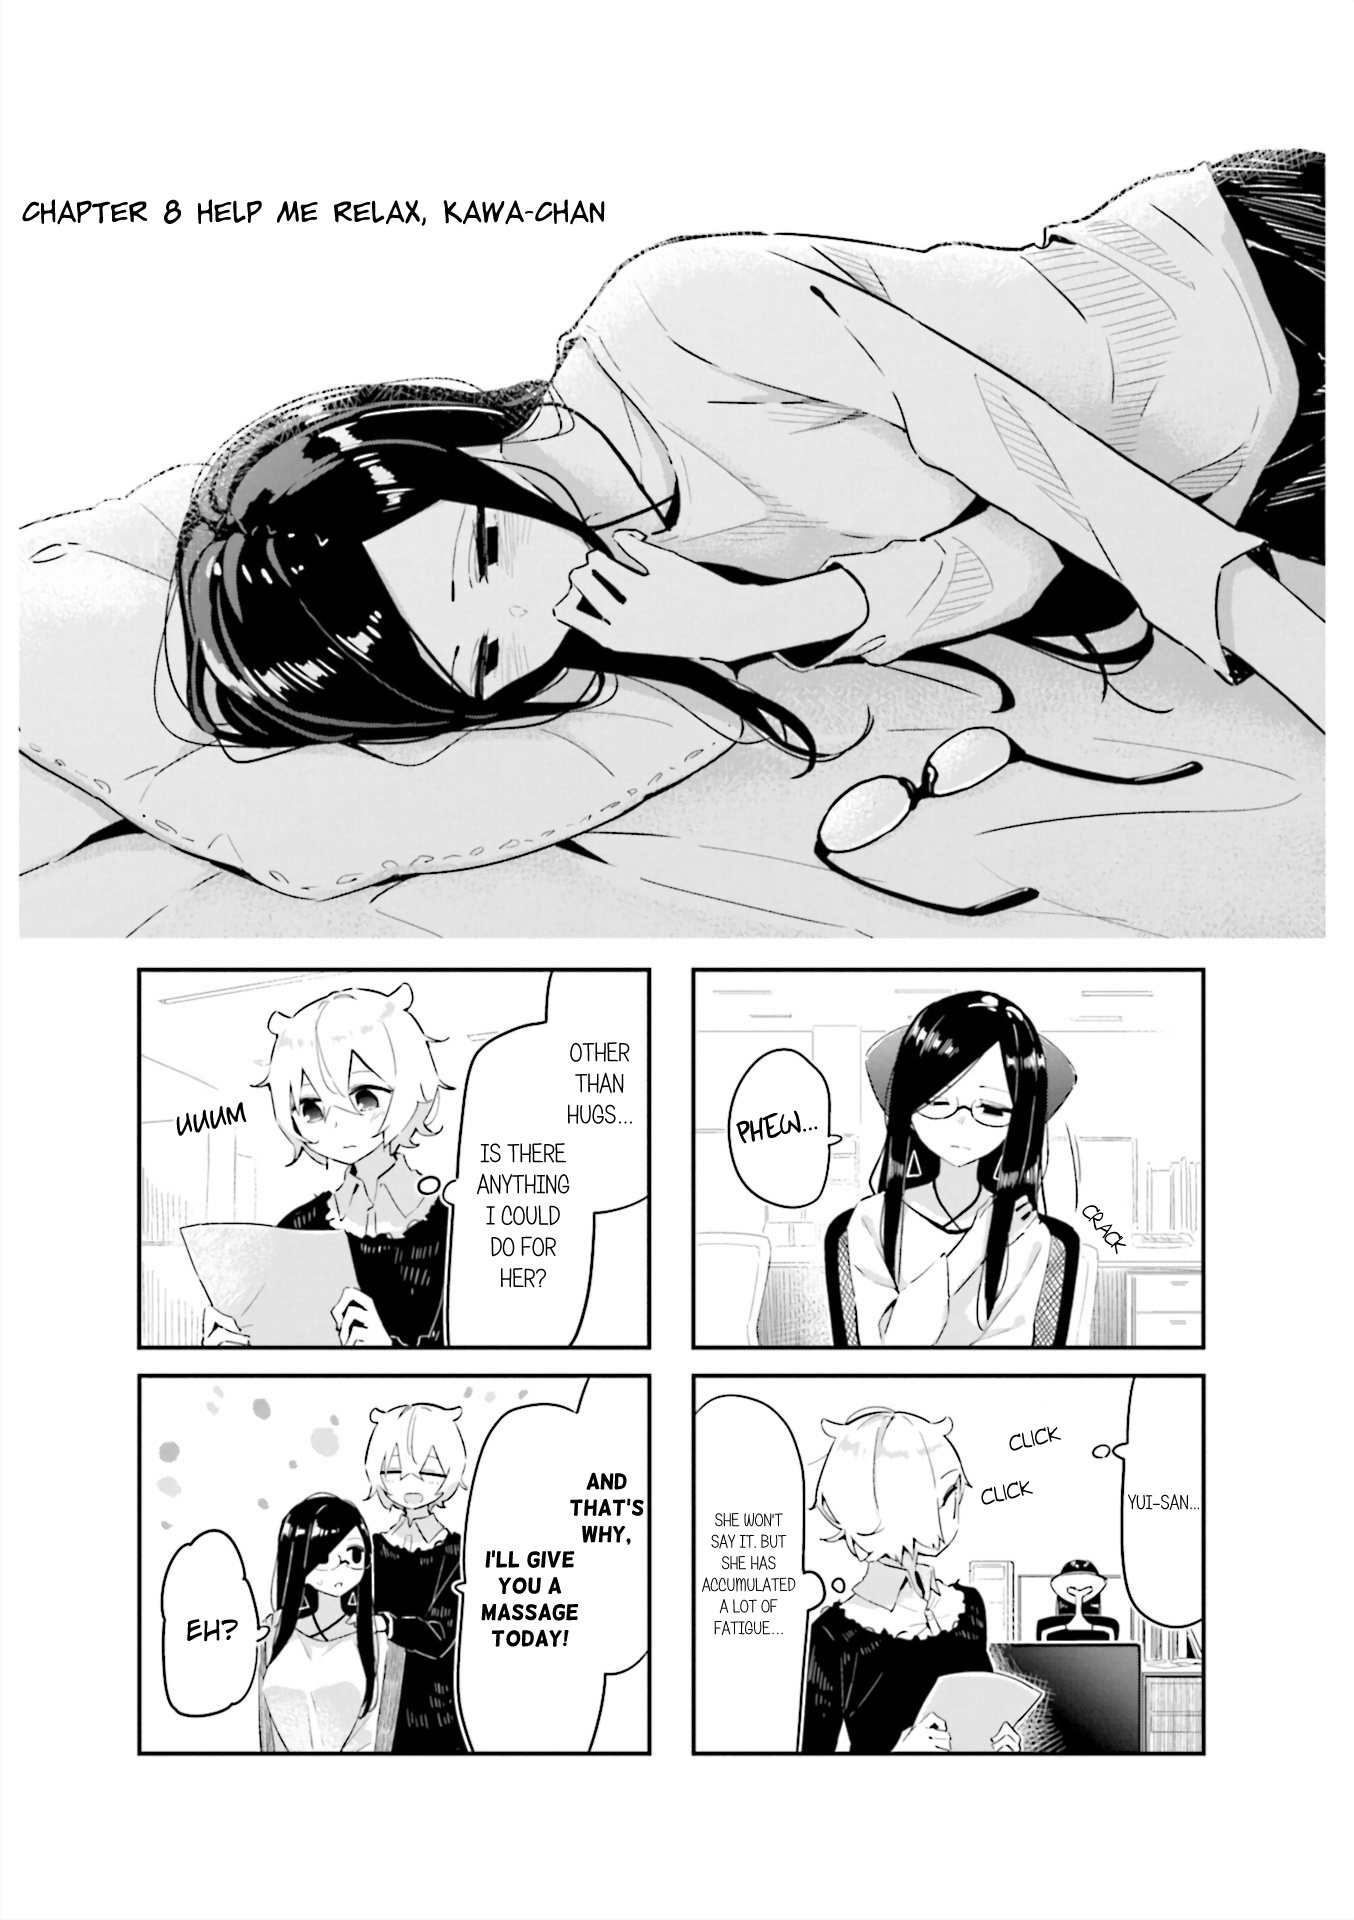 Hogushite, Yui-San Vol.1 Chapter 8: Help Me Relax, Kawa-Chan - Picture 1